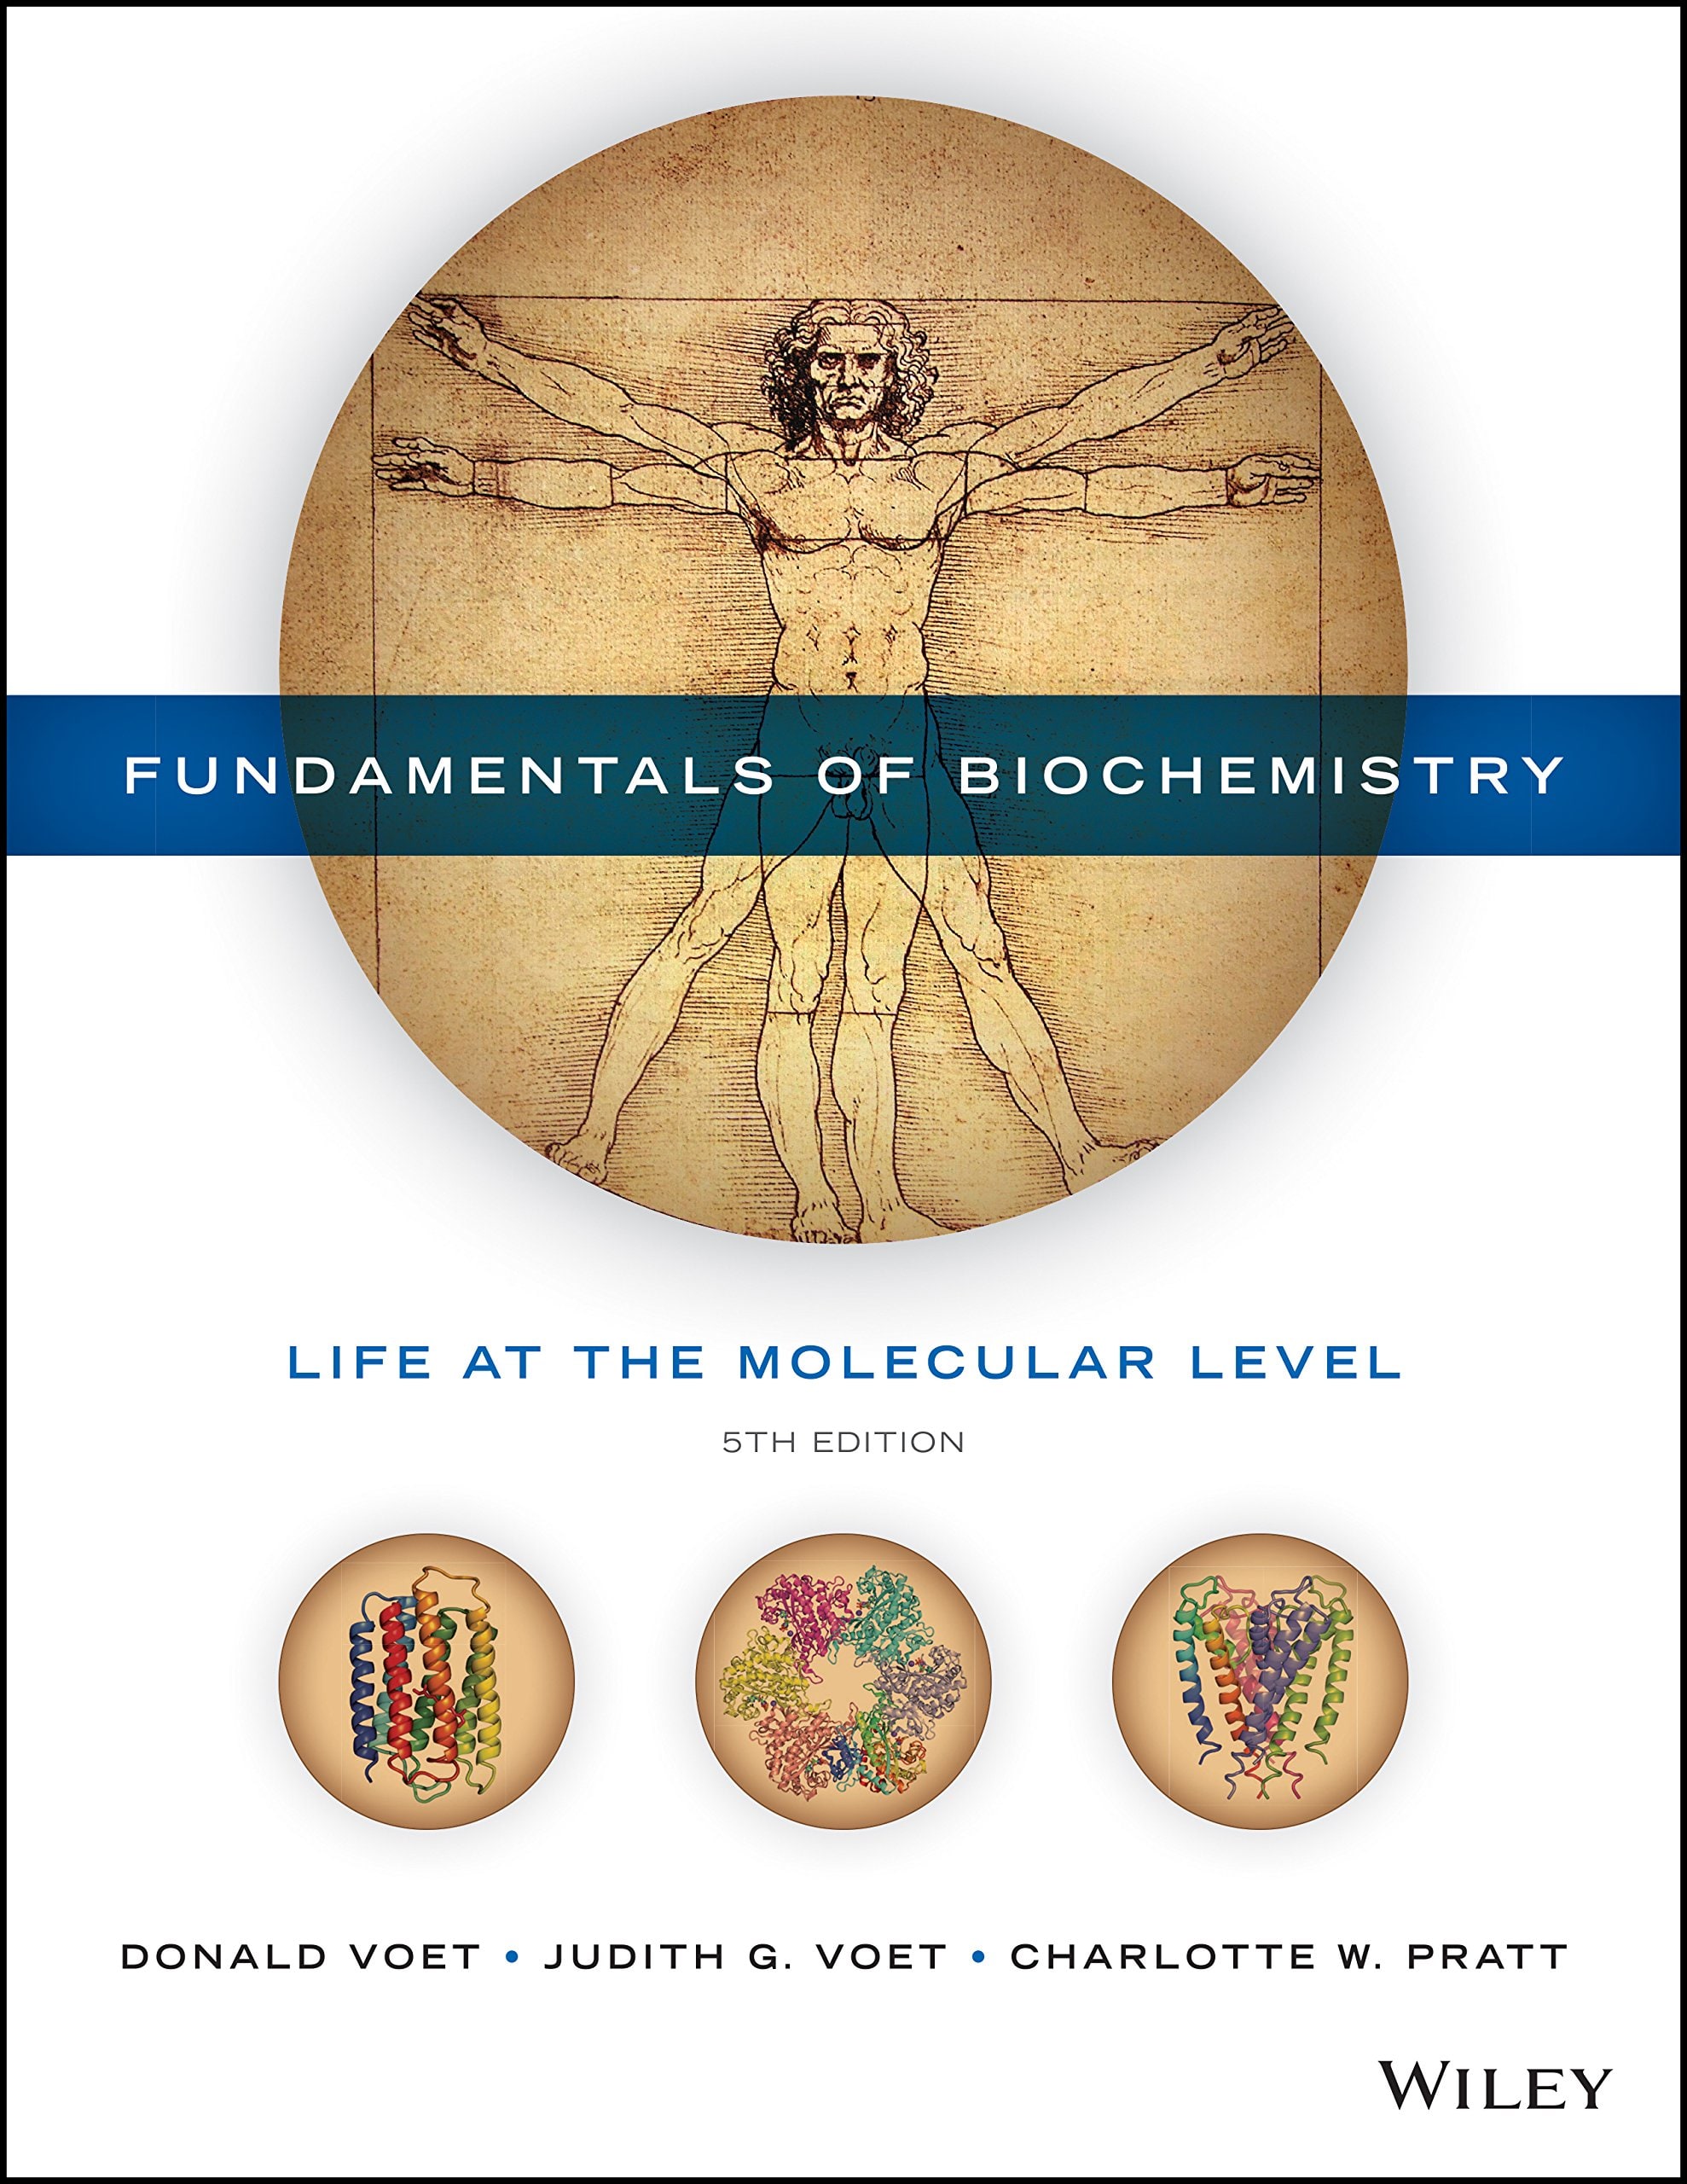 Fundamentals of Biochemistry: Life at the Molecular Level